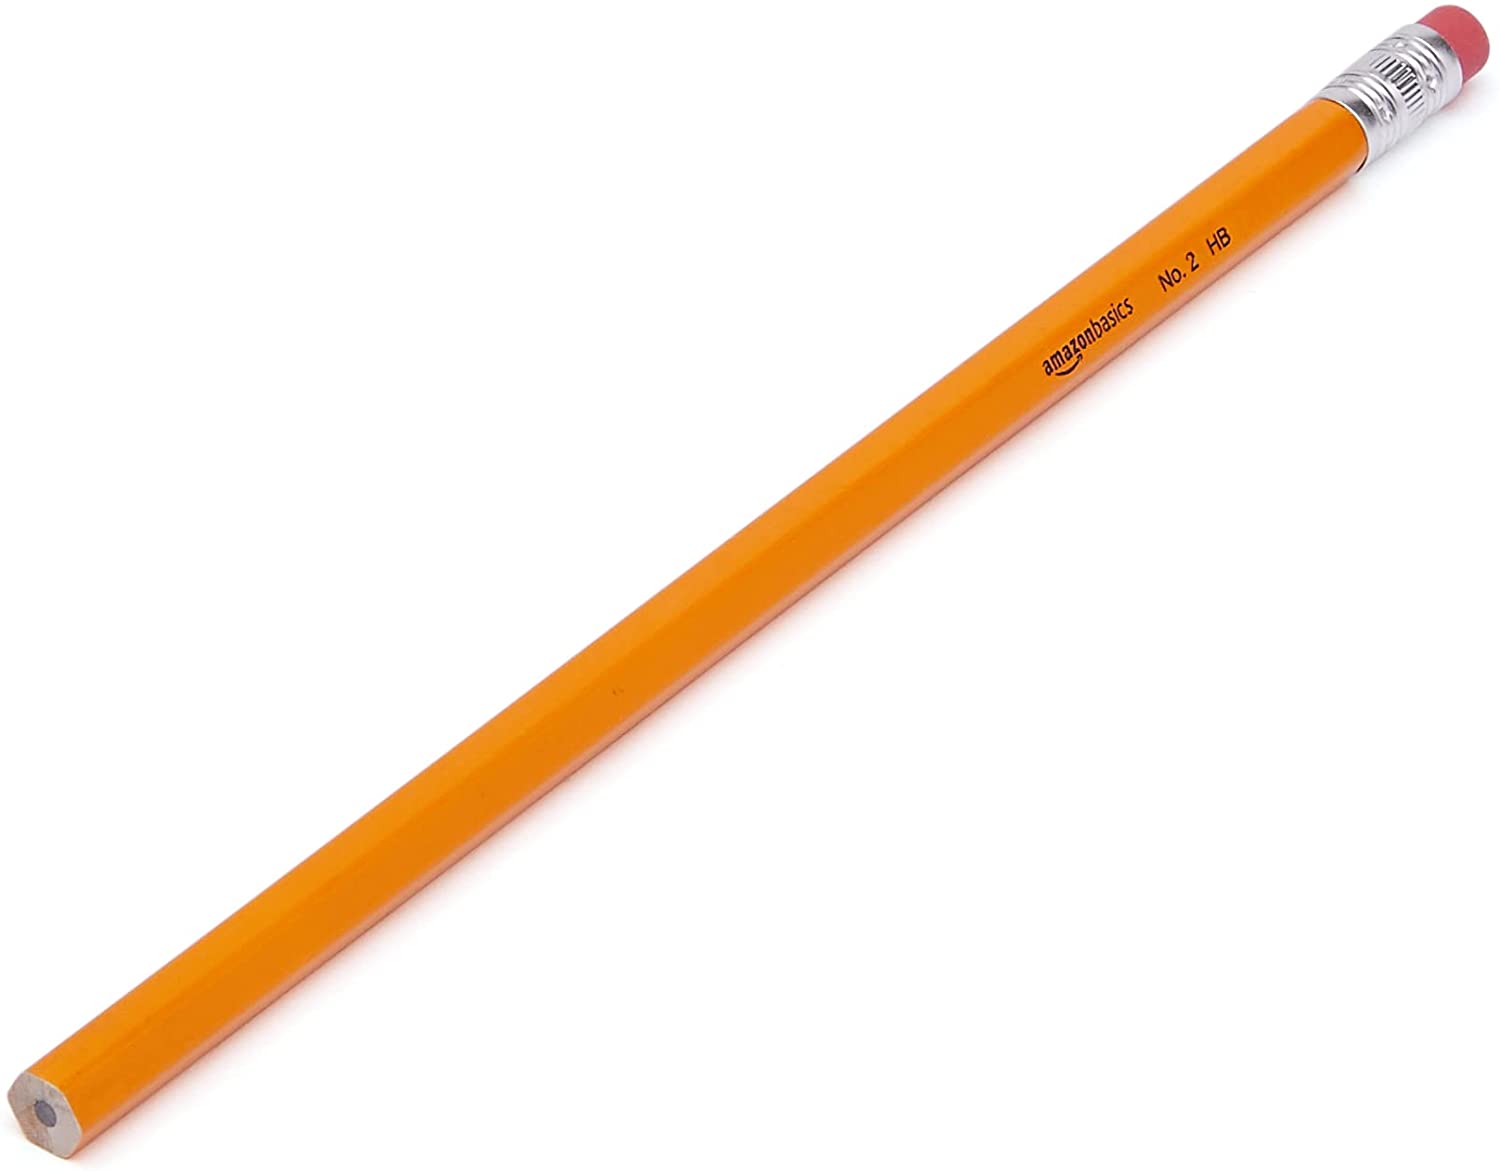 Amazon Basics Woodcased 2 Pencils, Pre-sharpened, HB Lead, Box of 30